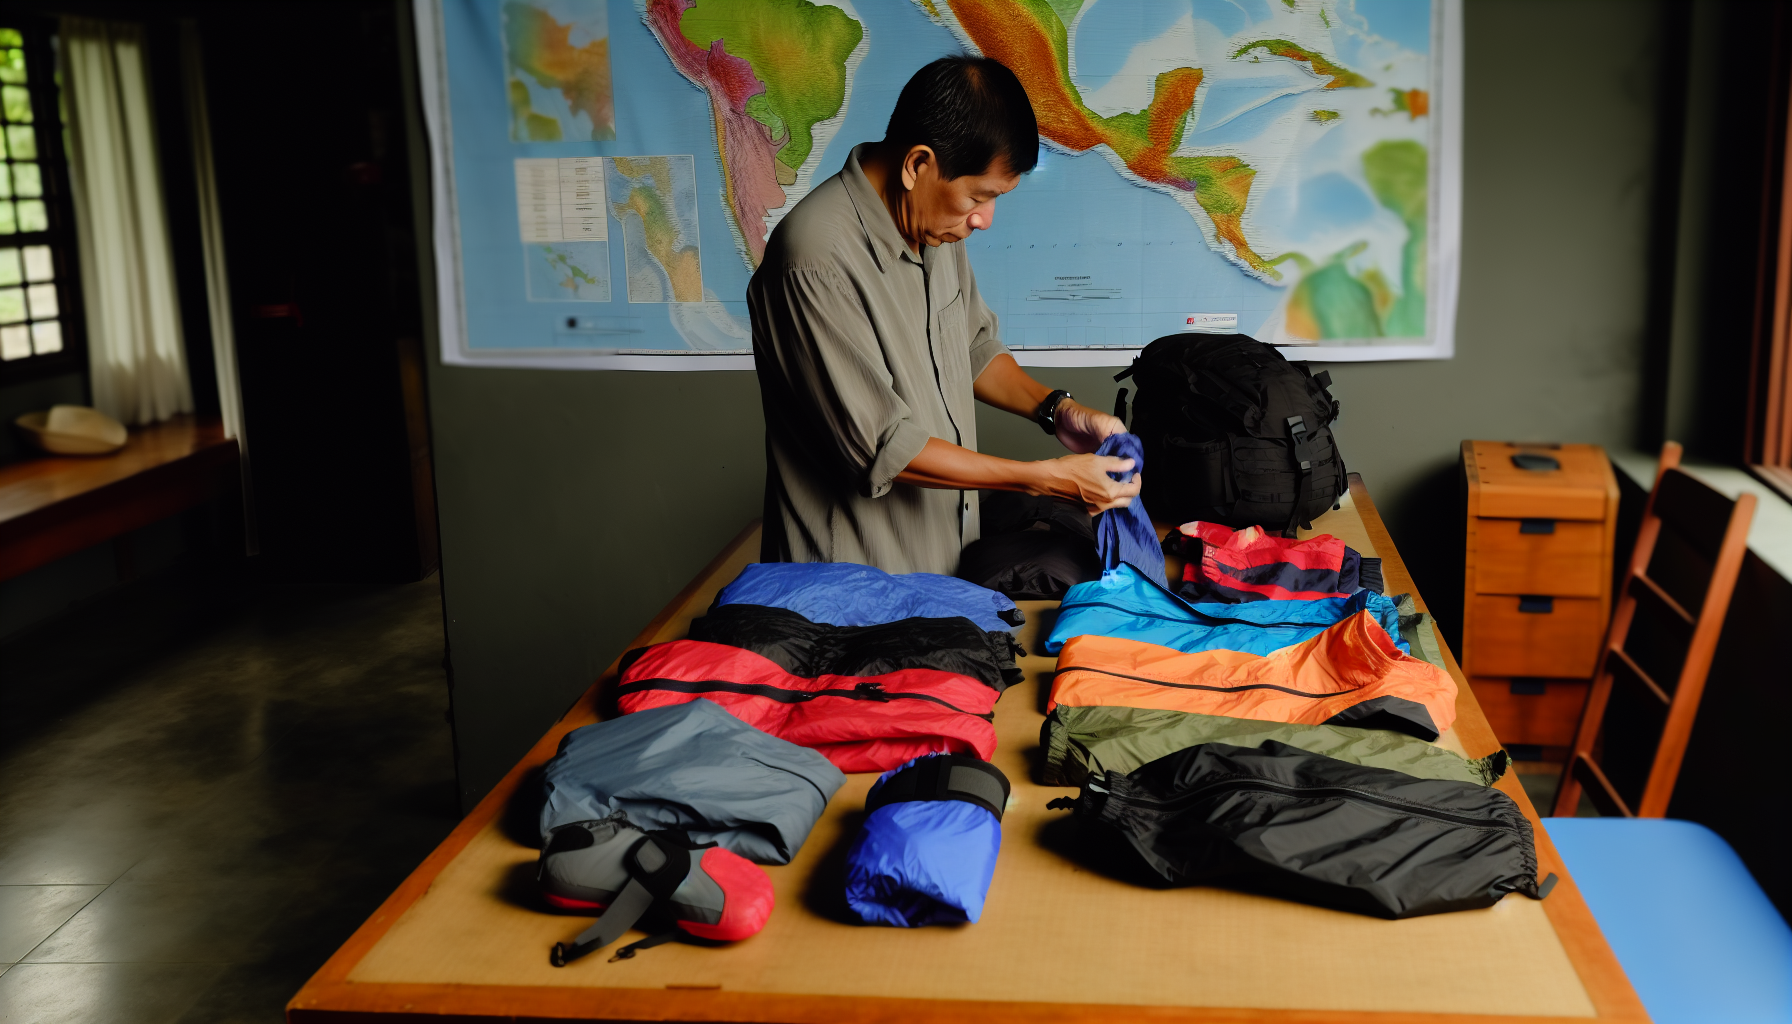 Traveler packing waterproof gear for Costa Rica's rainy season